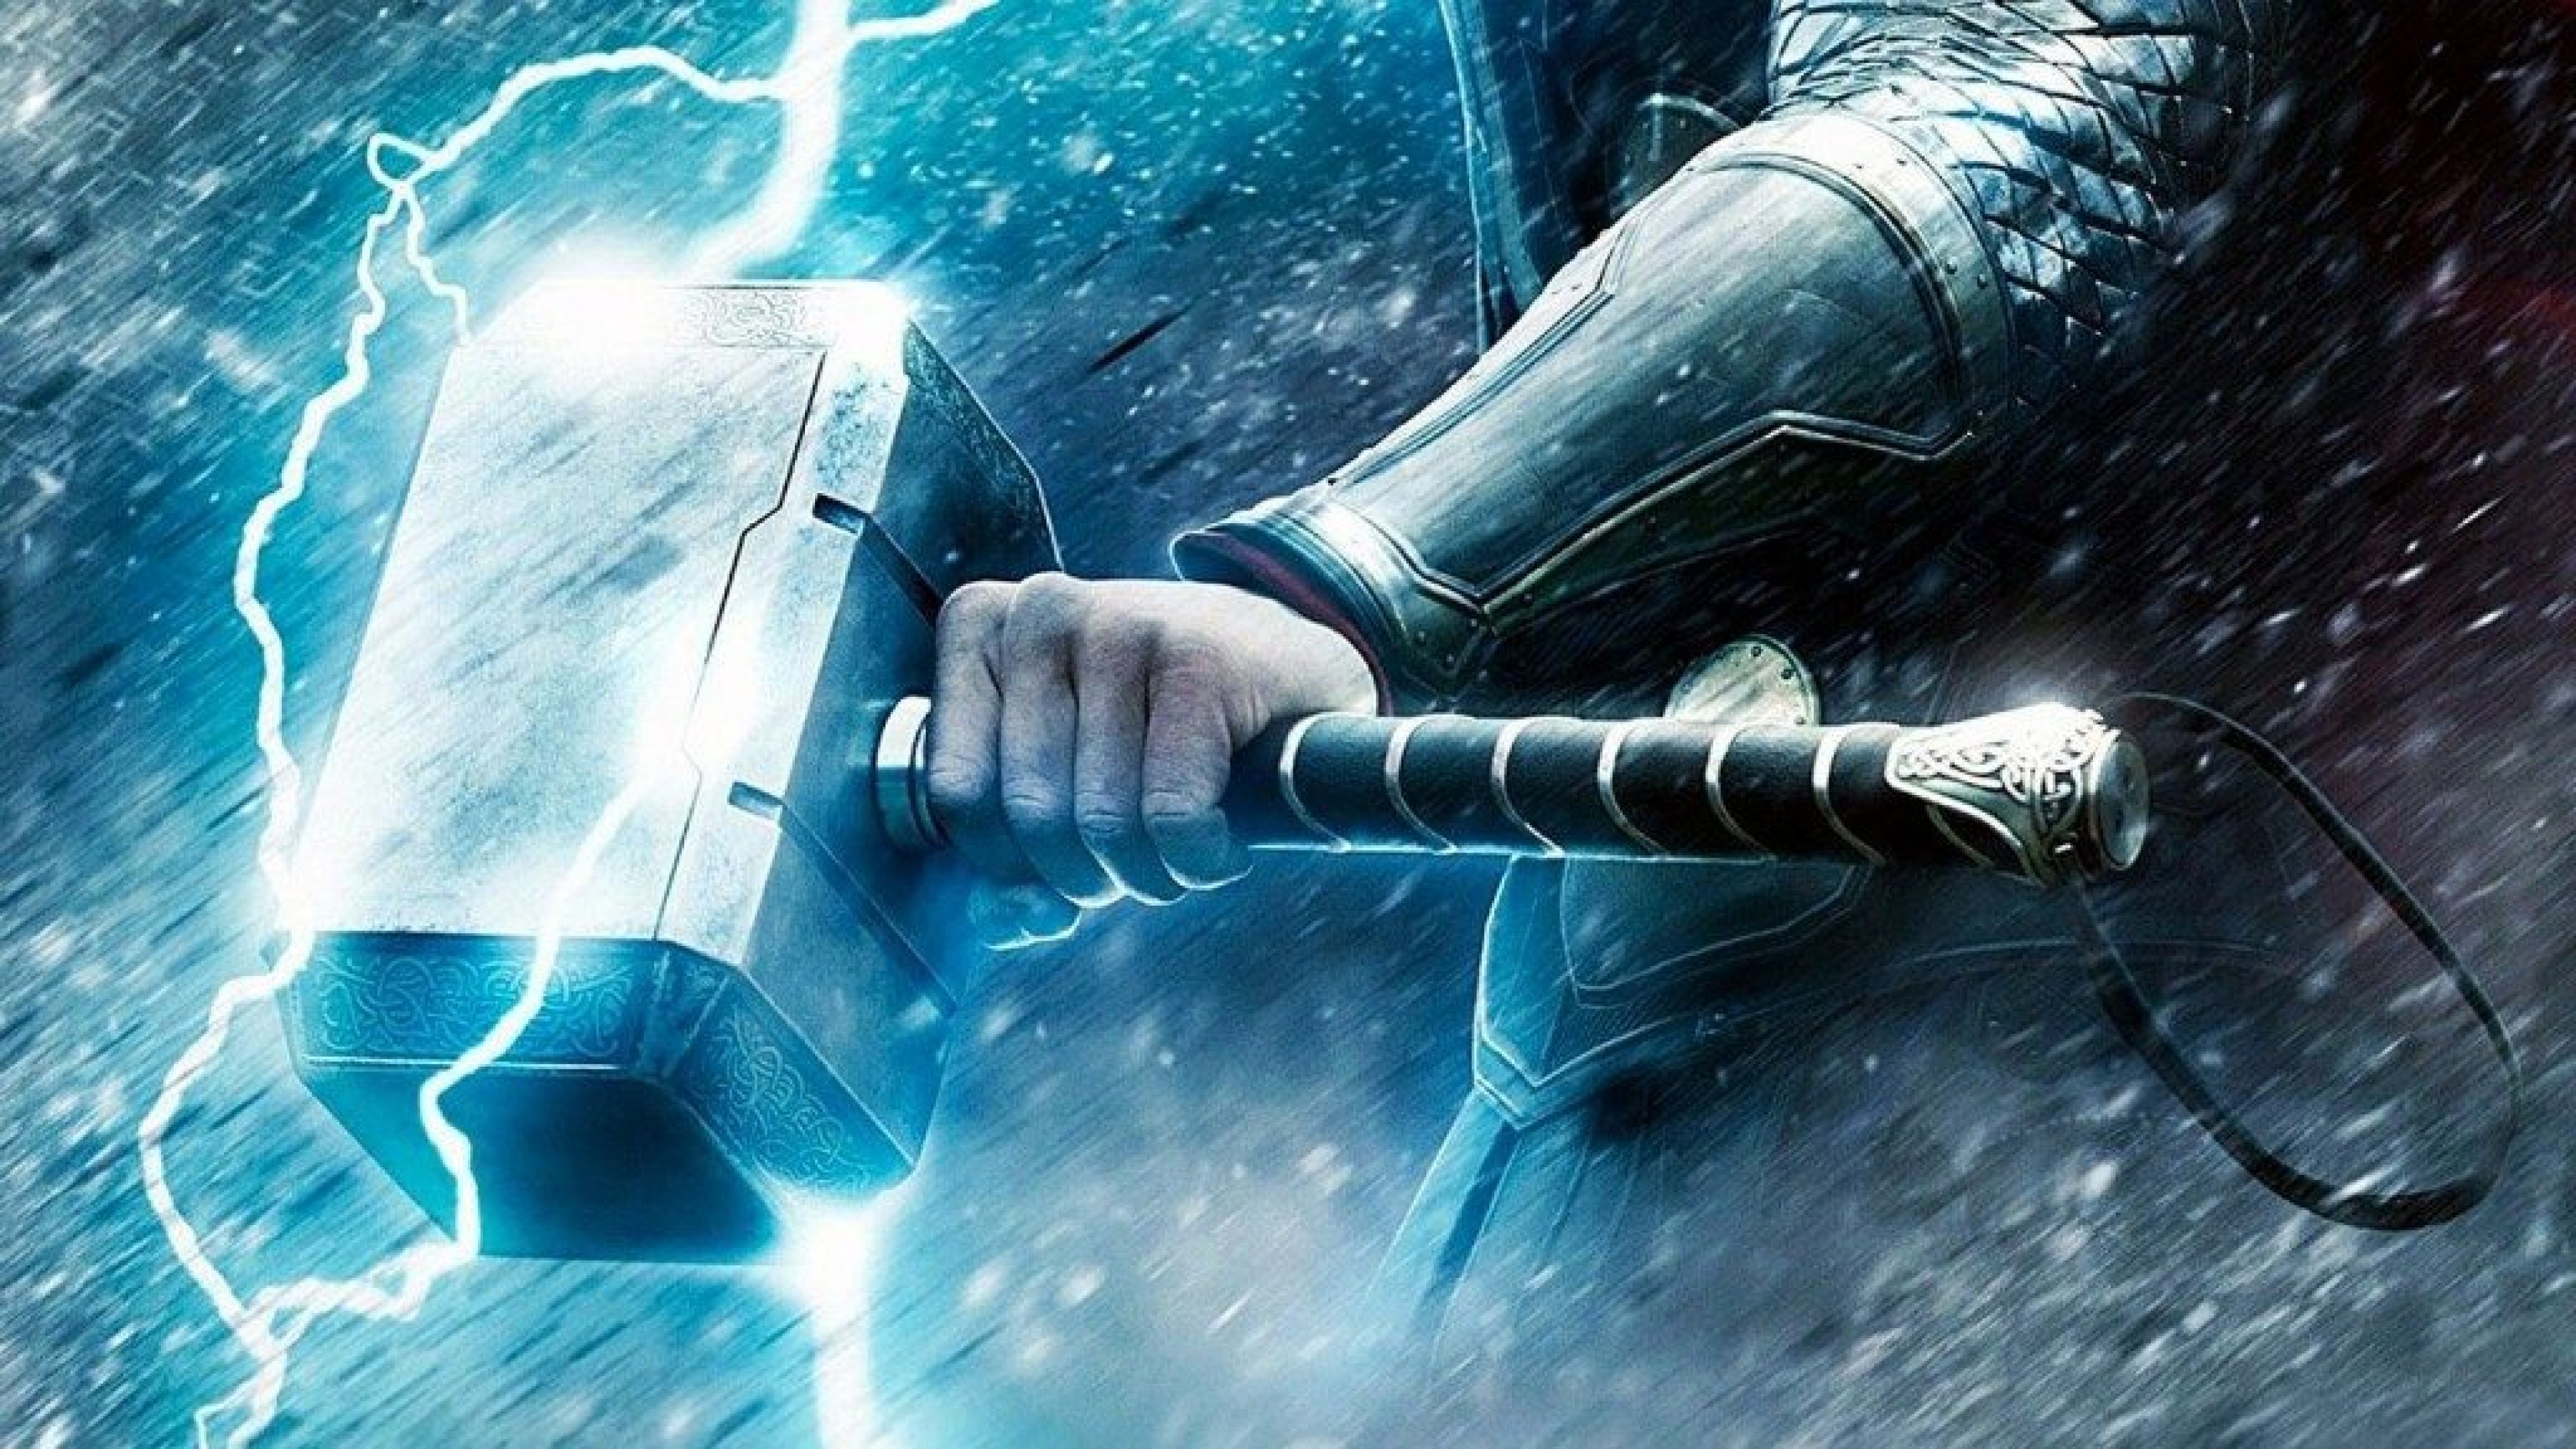 Thor: Ragnarok Hd Wallpapers